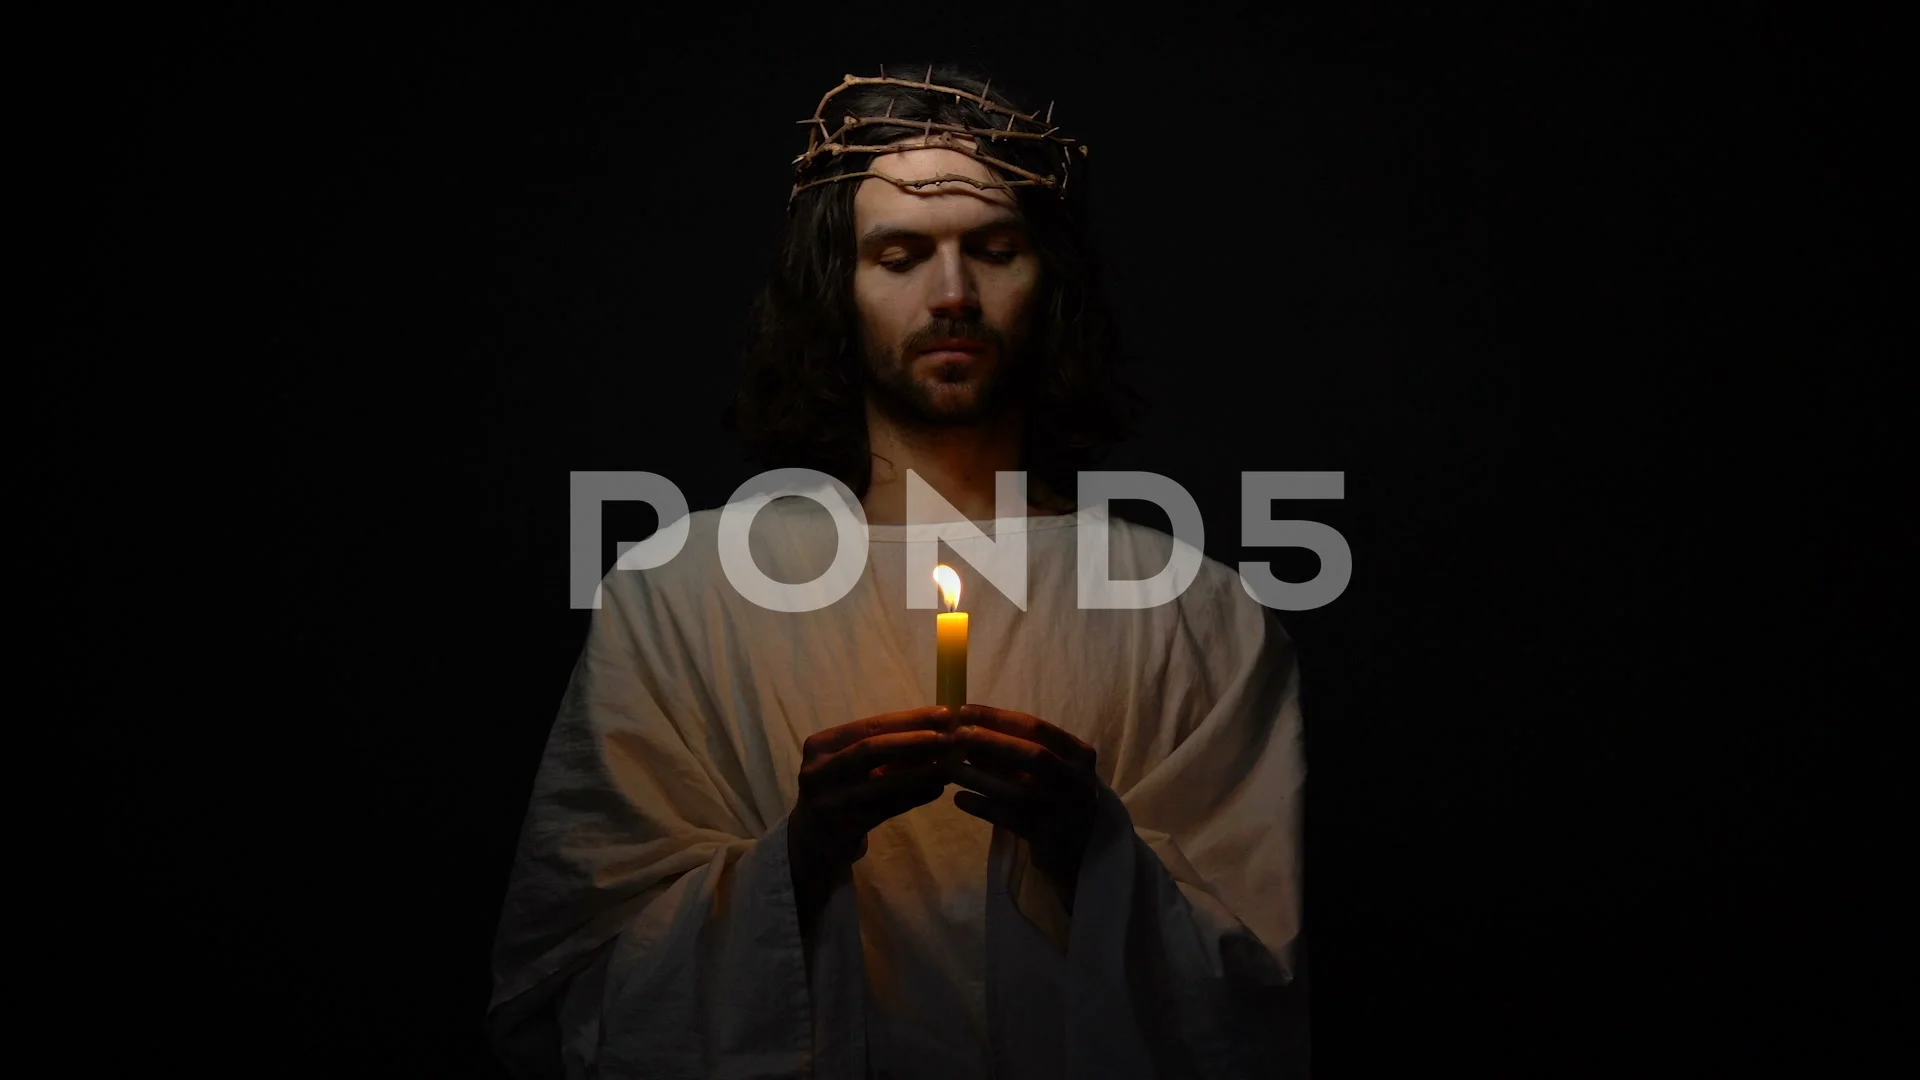 jesus christ crown thorns holding footage 104810250 prevstill